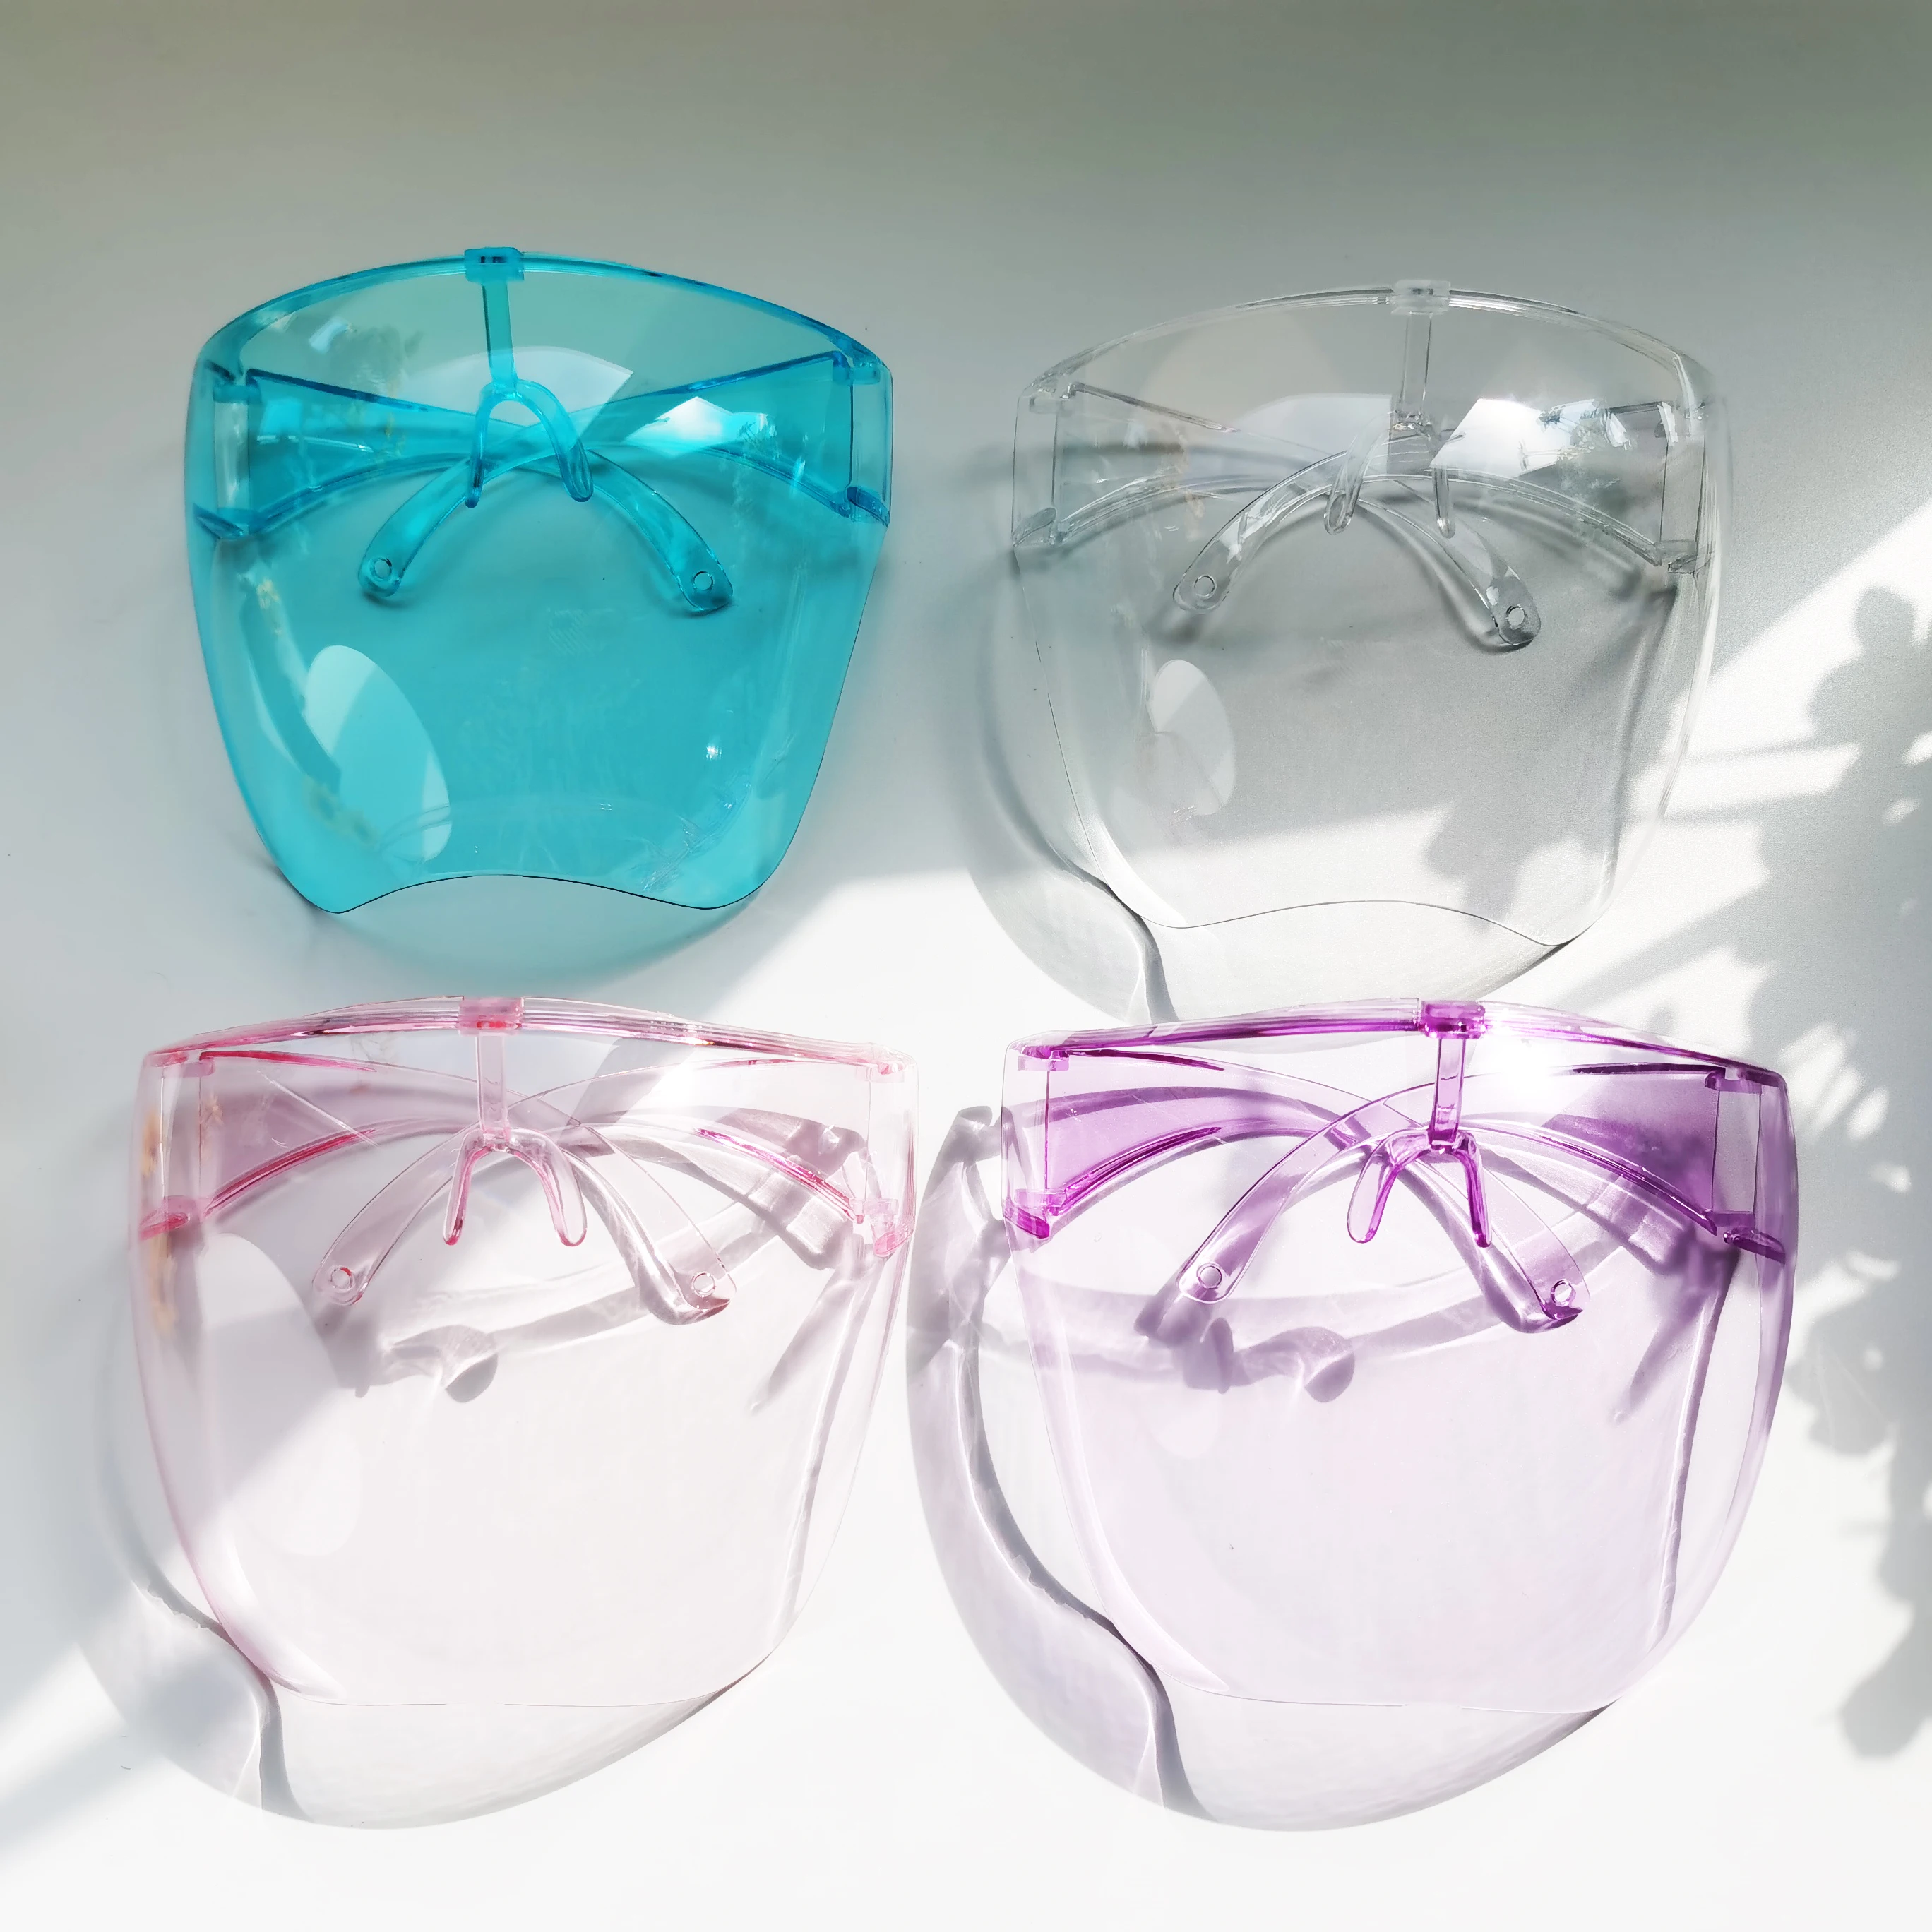 

NWOGLSS O1216 Children New Glasses Anti Fog Visor Eyewear Anti Vertigo Shades Sports Kids Sunglasses